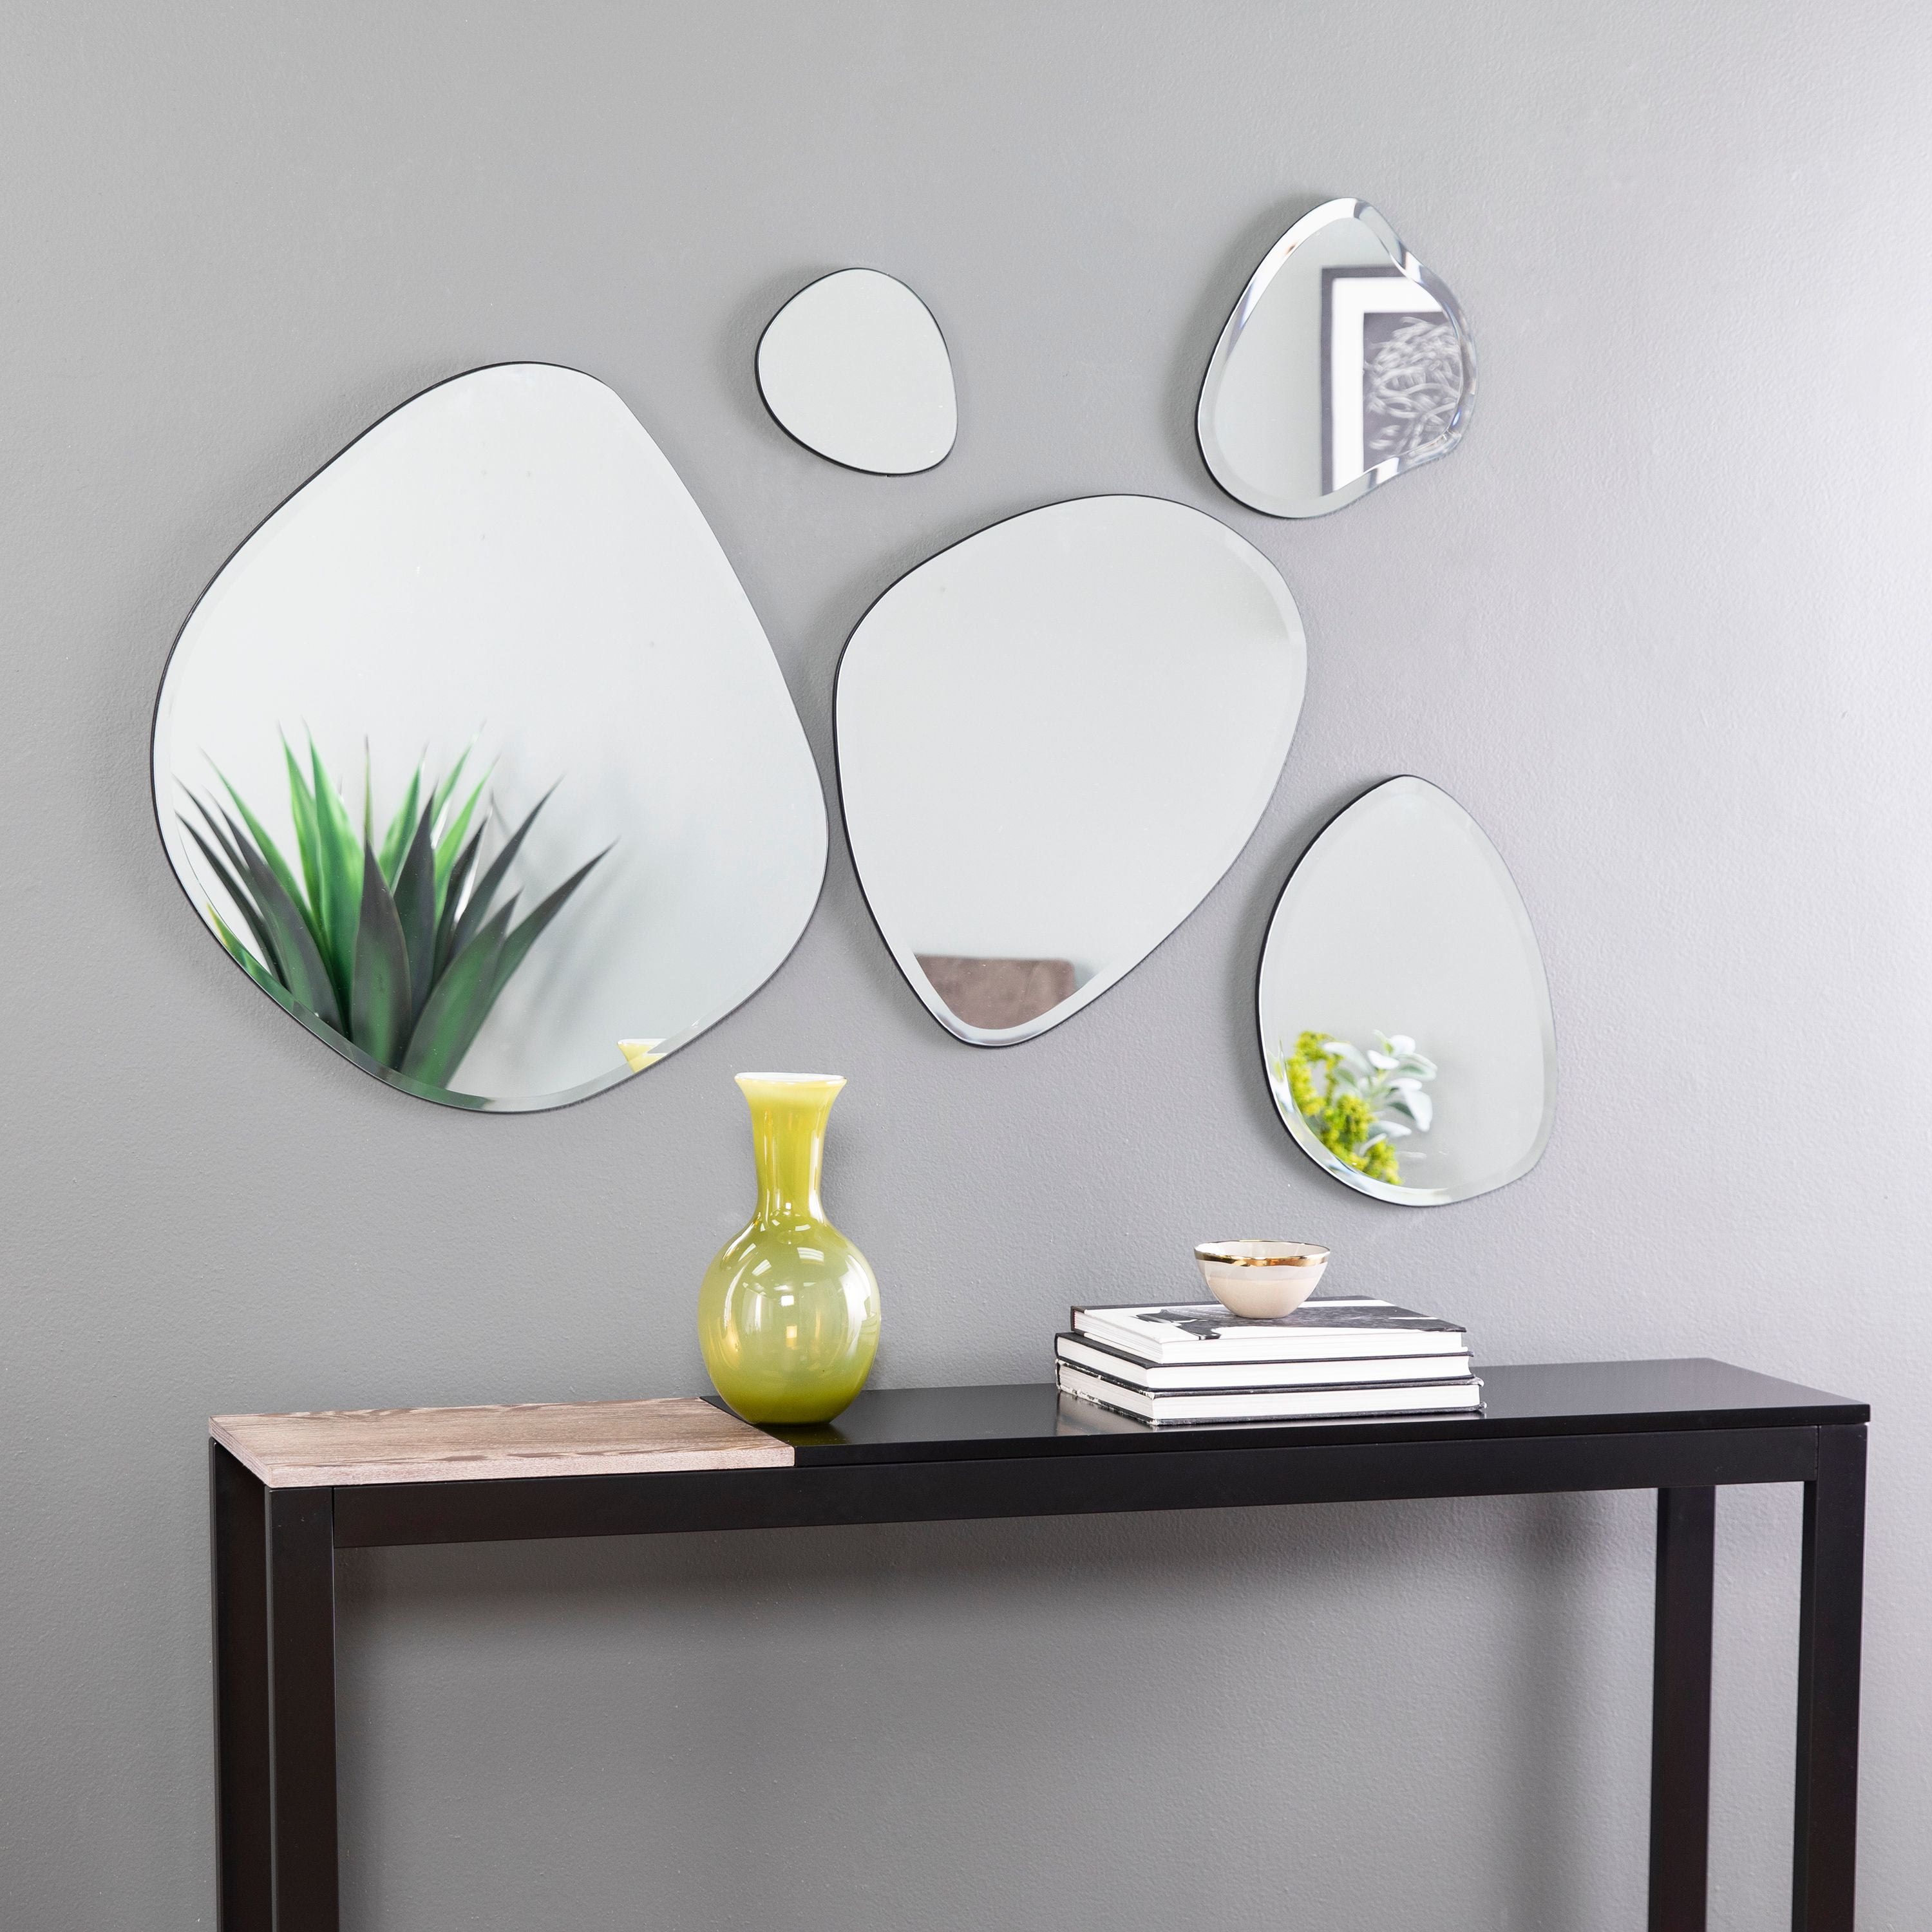 Estelle Glam 5pc Decorative Mirror Set, Pebble Shaped - Walmart.com